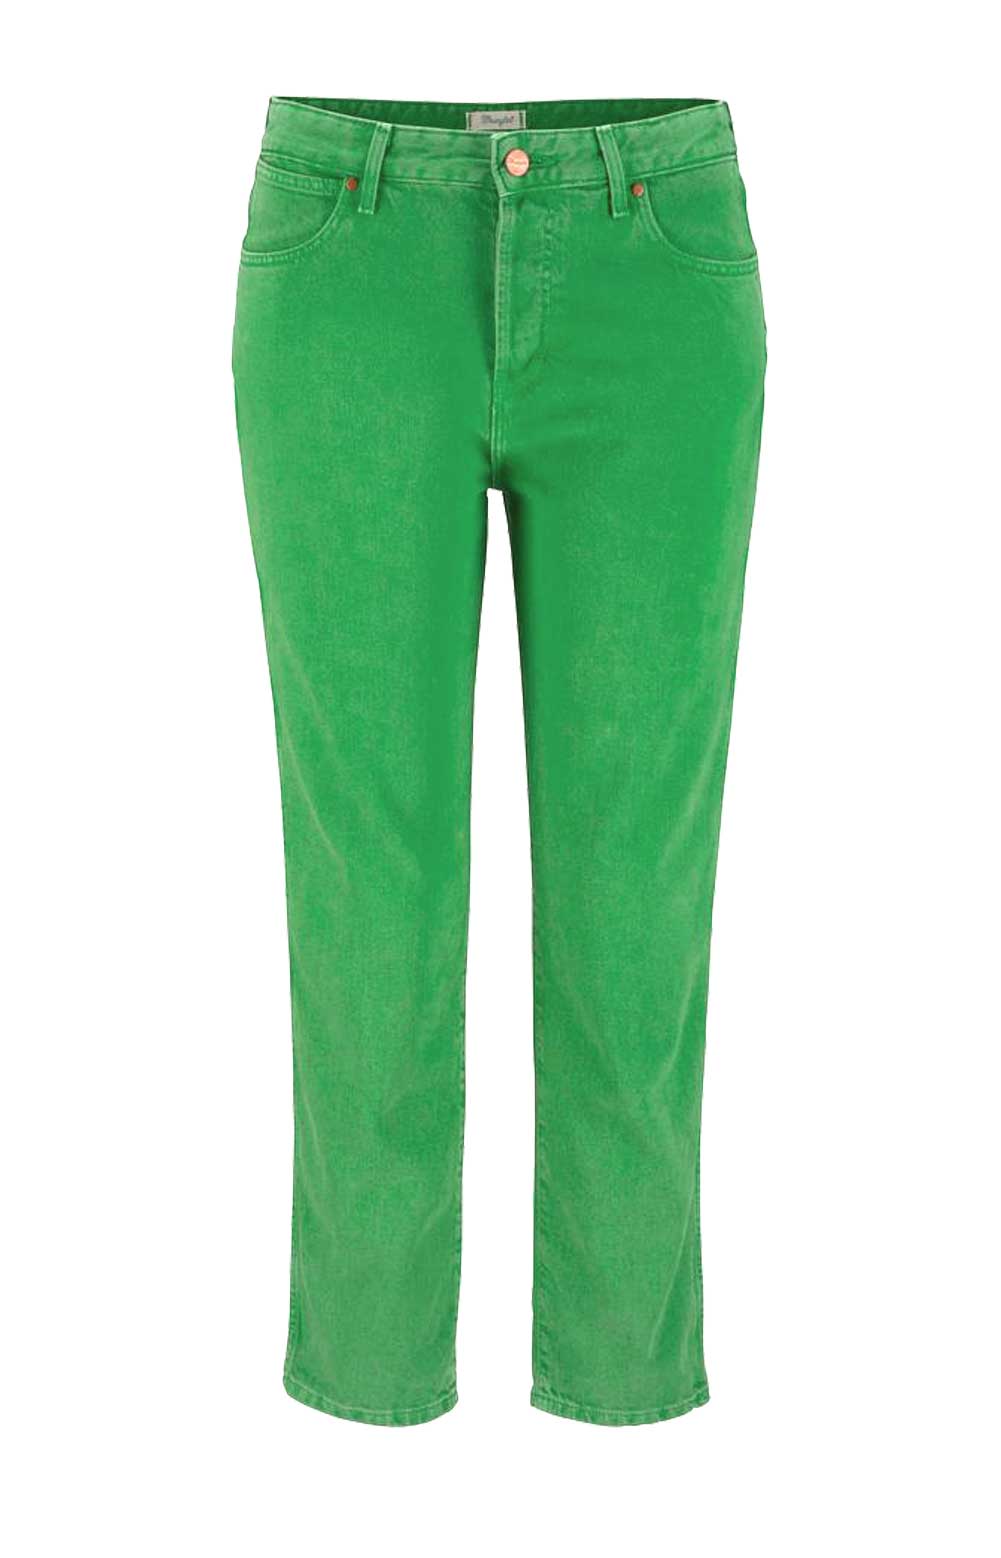 Wrangler Damen Marken-7/8-Jeans, grün